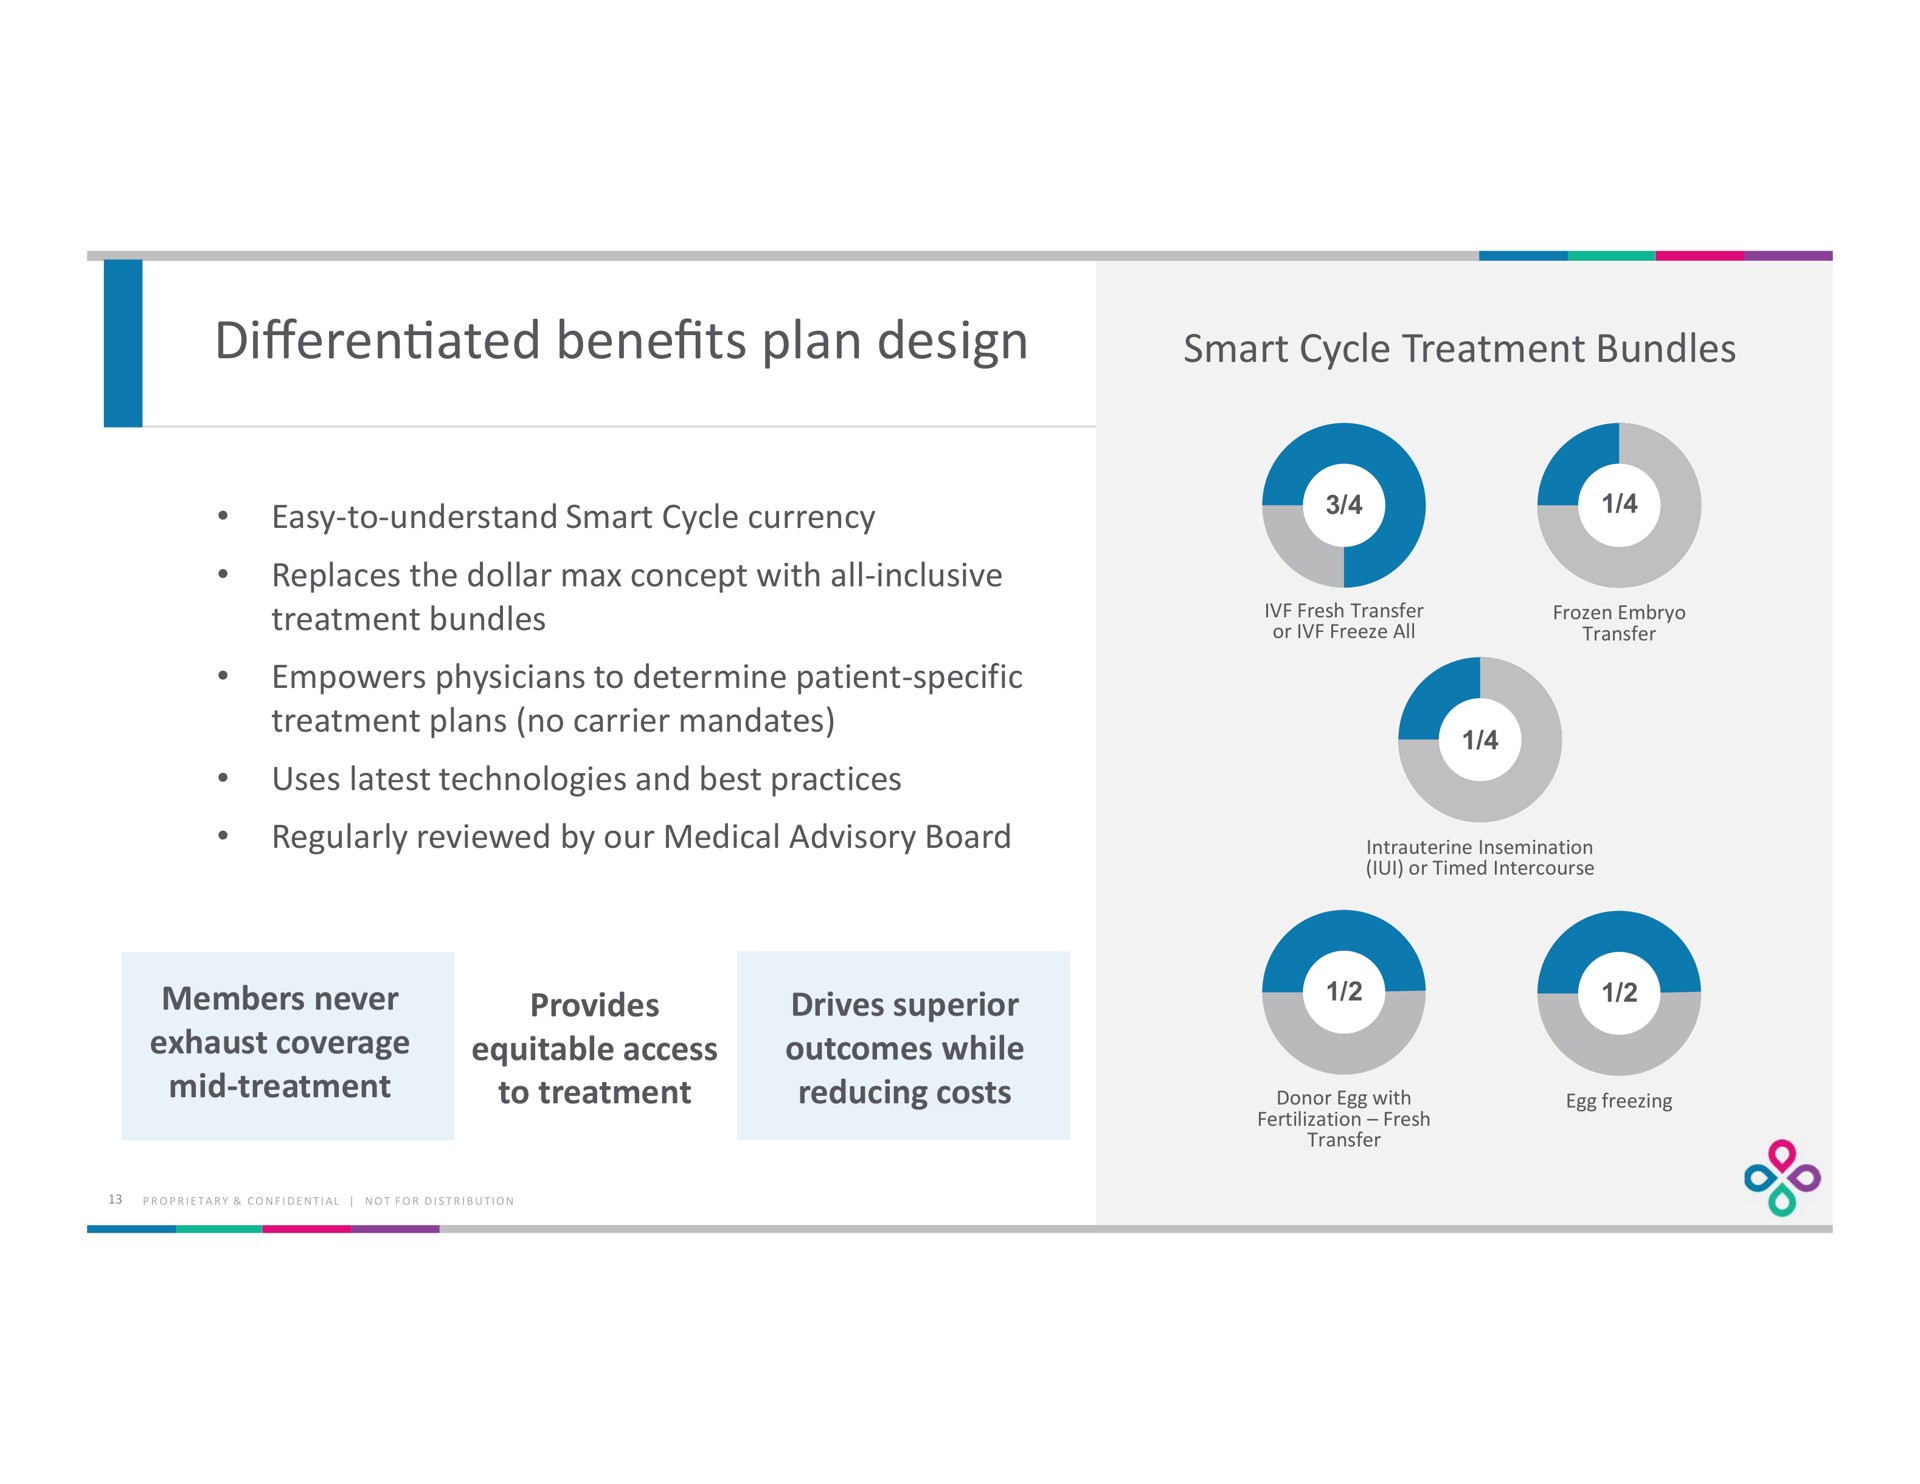 bene plan design differentiated benefits | Progyny